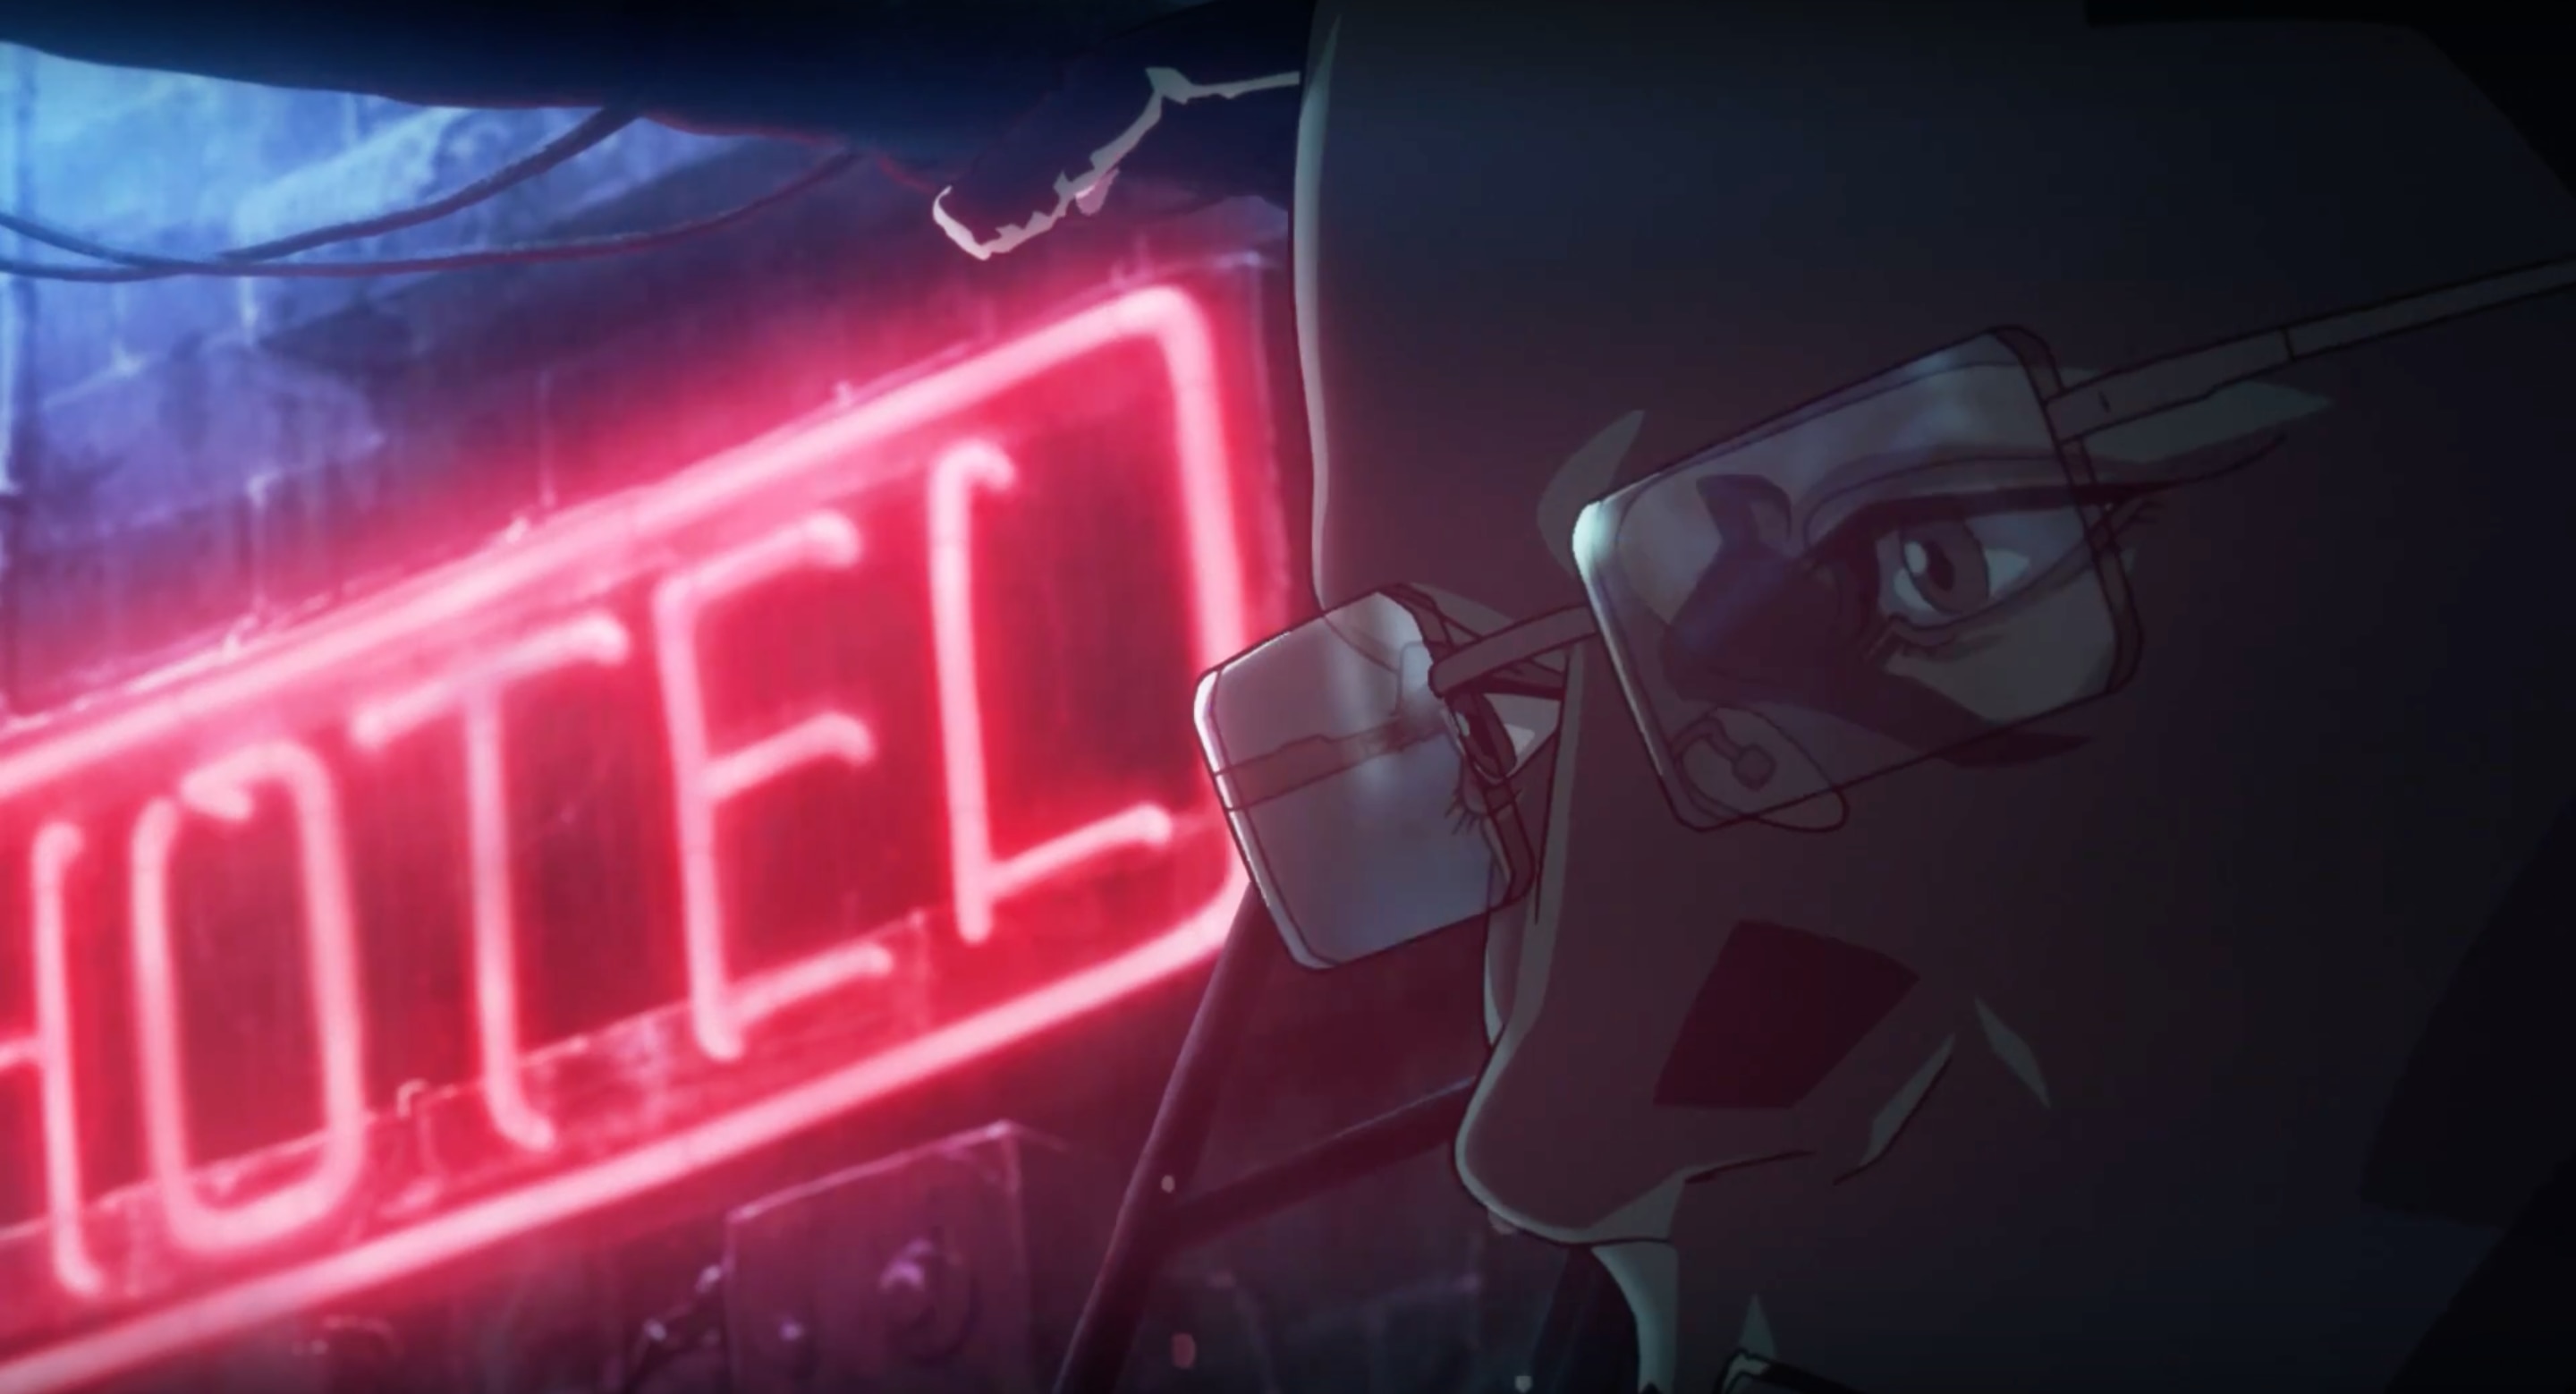 Blade Runner Black Out 22 Shinchiro Watanabe S Anime Short Animates A Dystopian Future